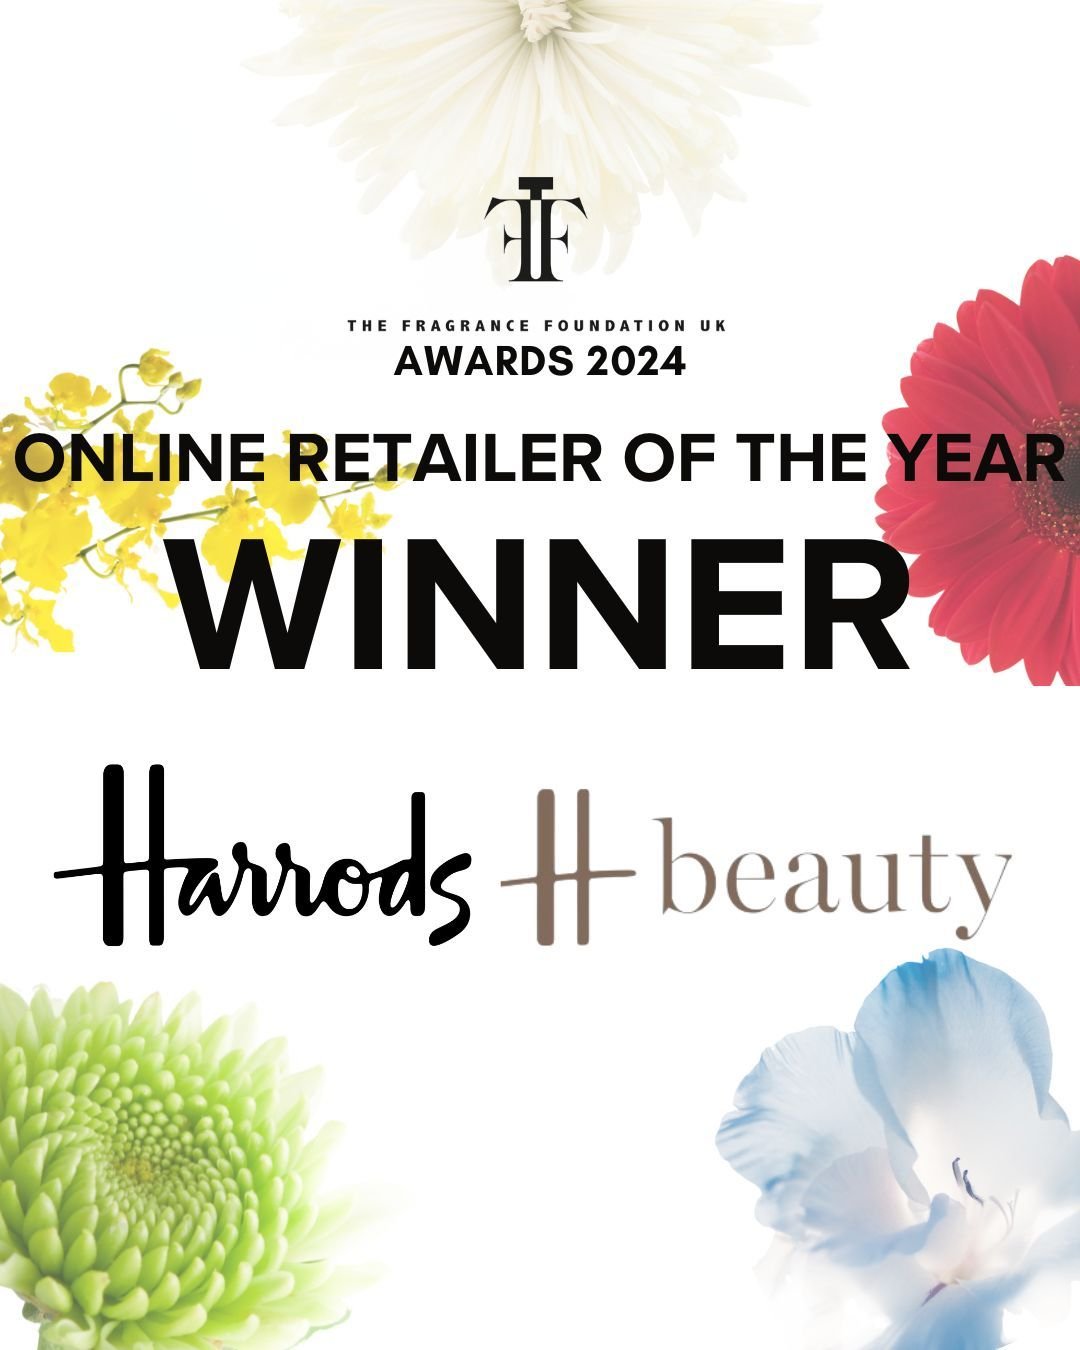 Winner of The Fragrance Foundation UK Online Retailer of the Year Award... 
@Harrods / @HarrodsBeauty! Congratulations!

#TFFAwards2024 #Winner #FragranceAwards #Fragrance #FragranceLover #FragranceCelebration